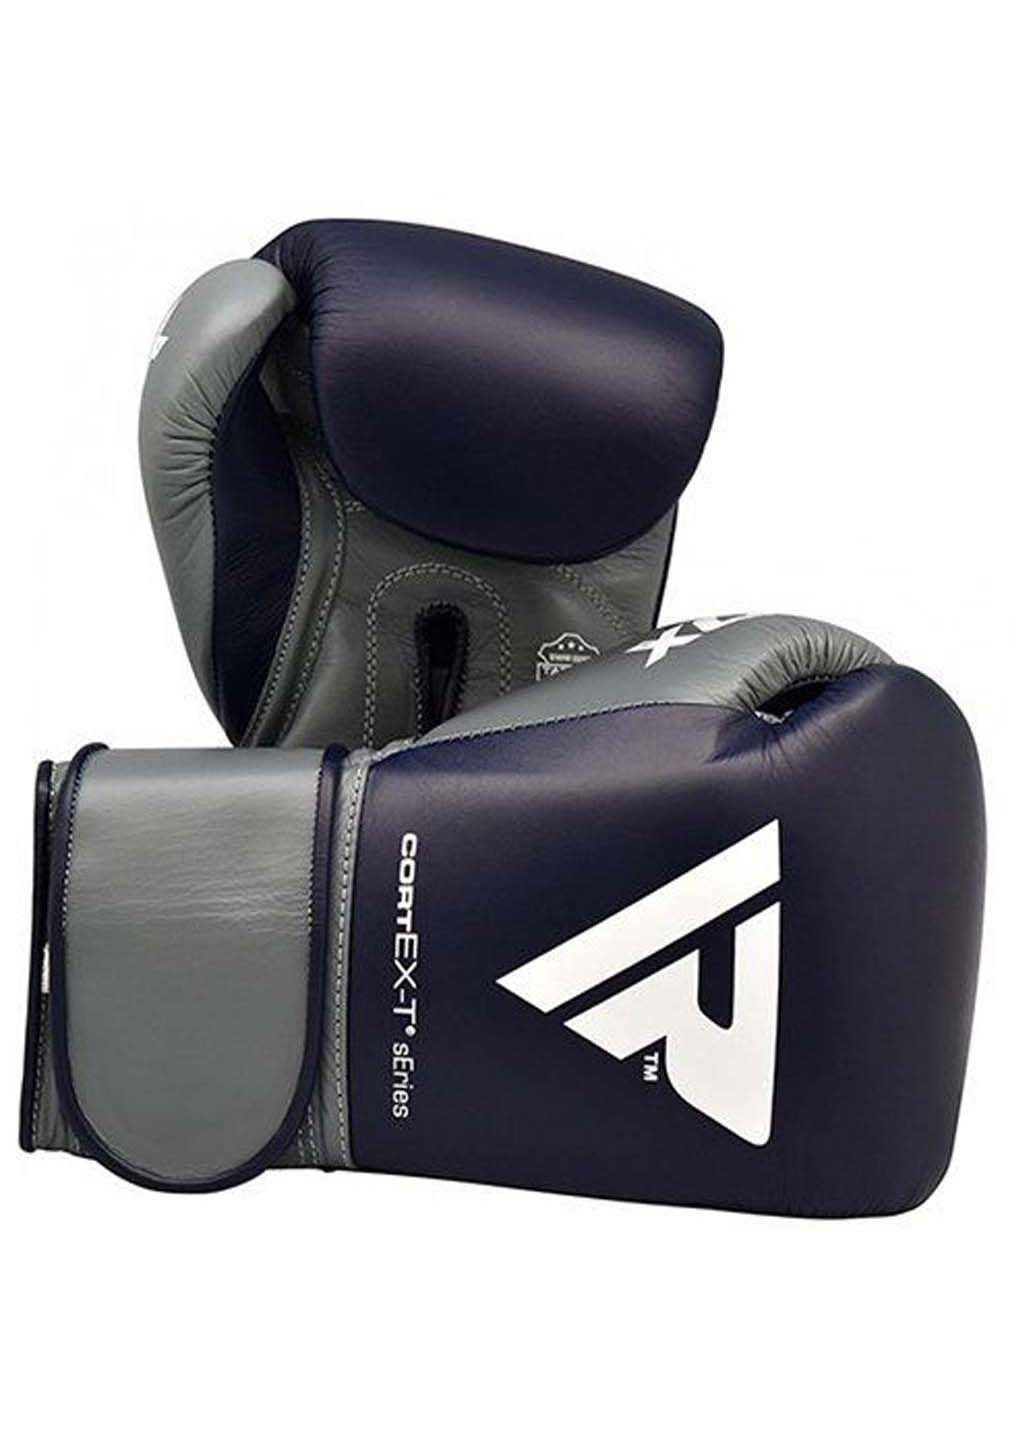 Боксерские перчатки Leather Pro C4 Inc 10oz RDX (285794112)